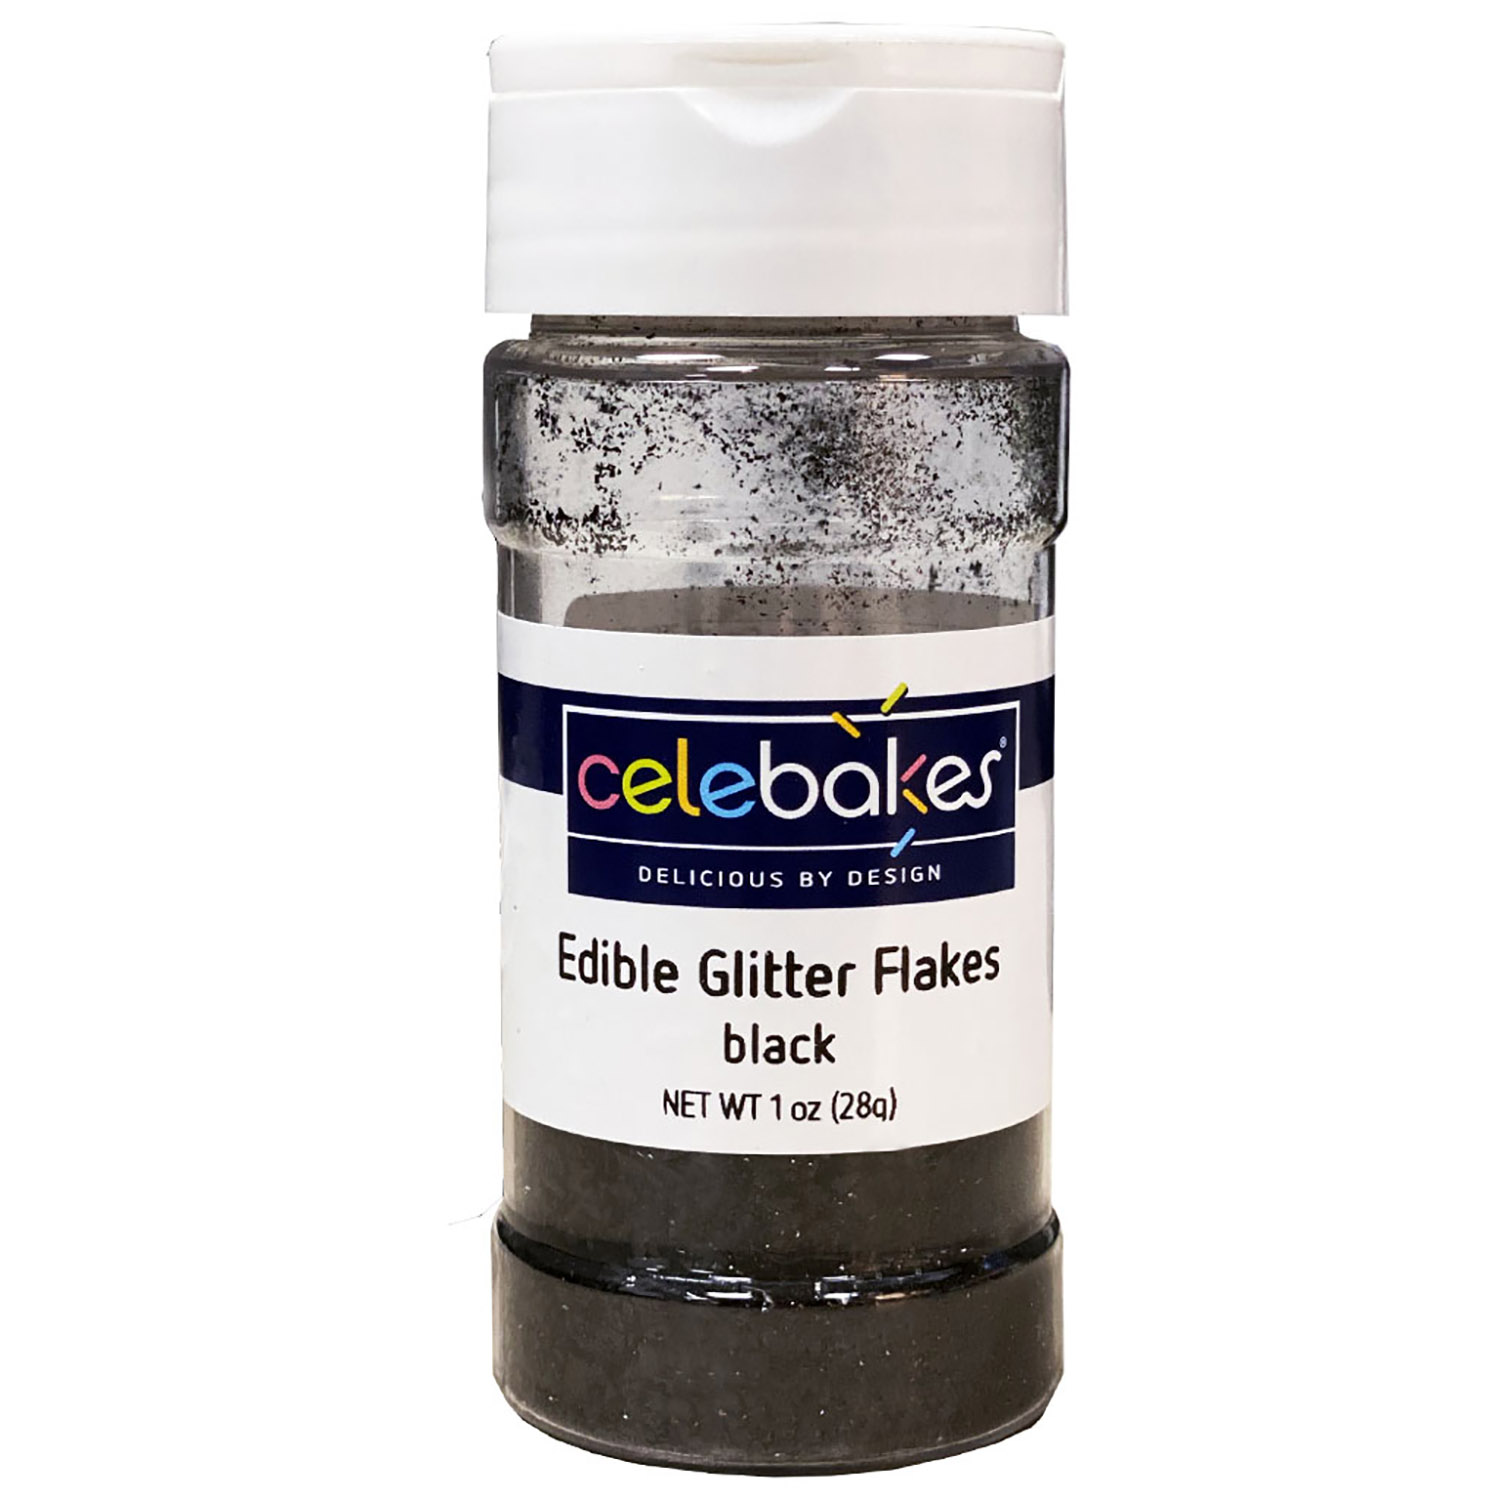 Black Edible Glitter Flakes - Celebakes